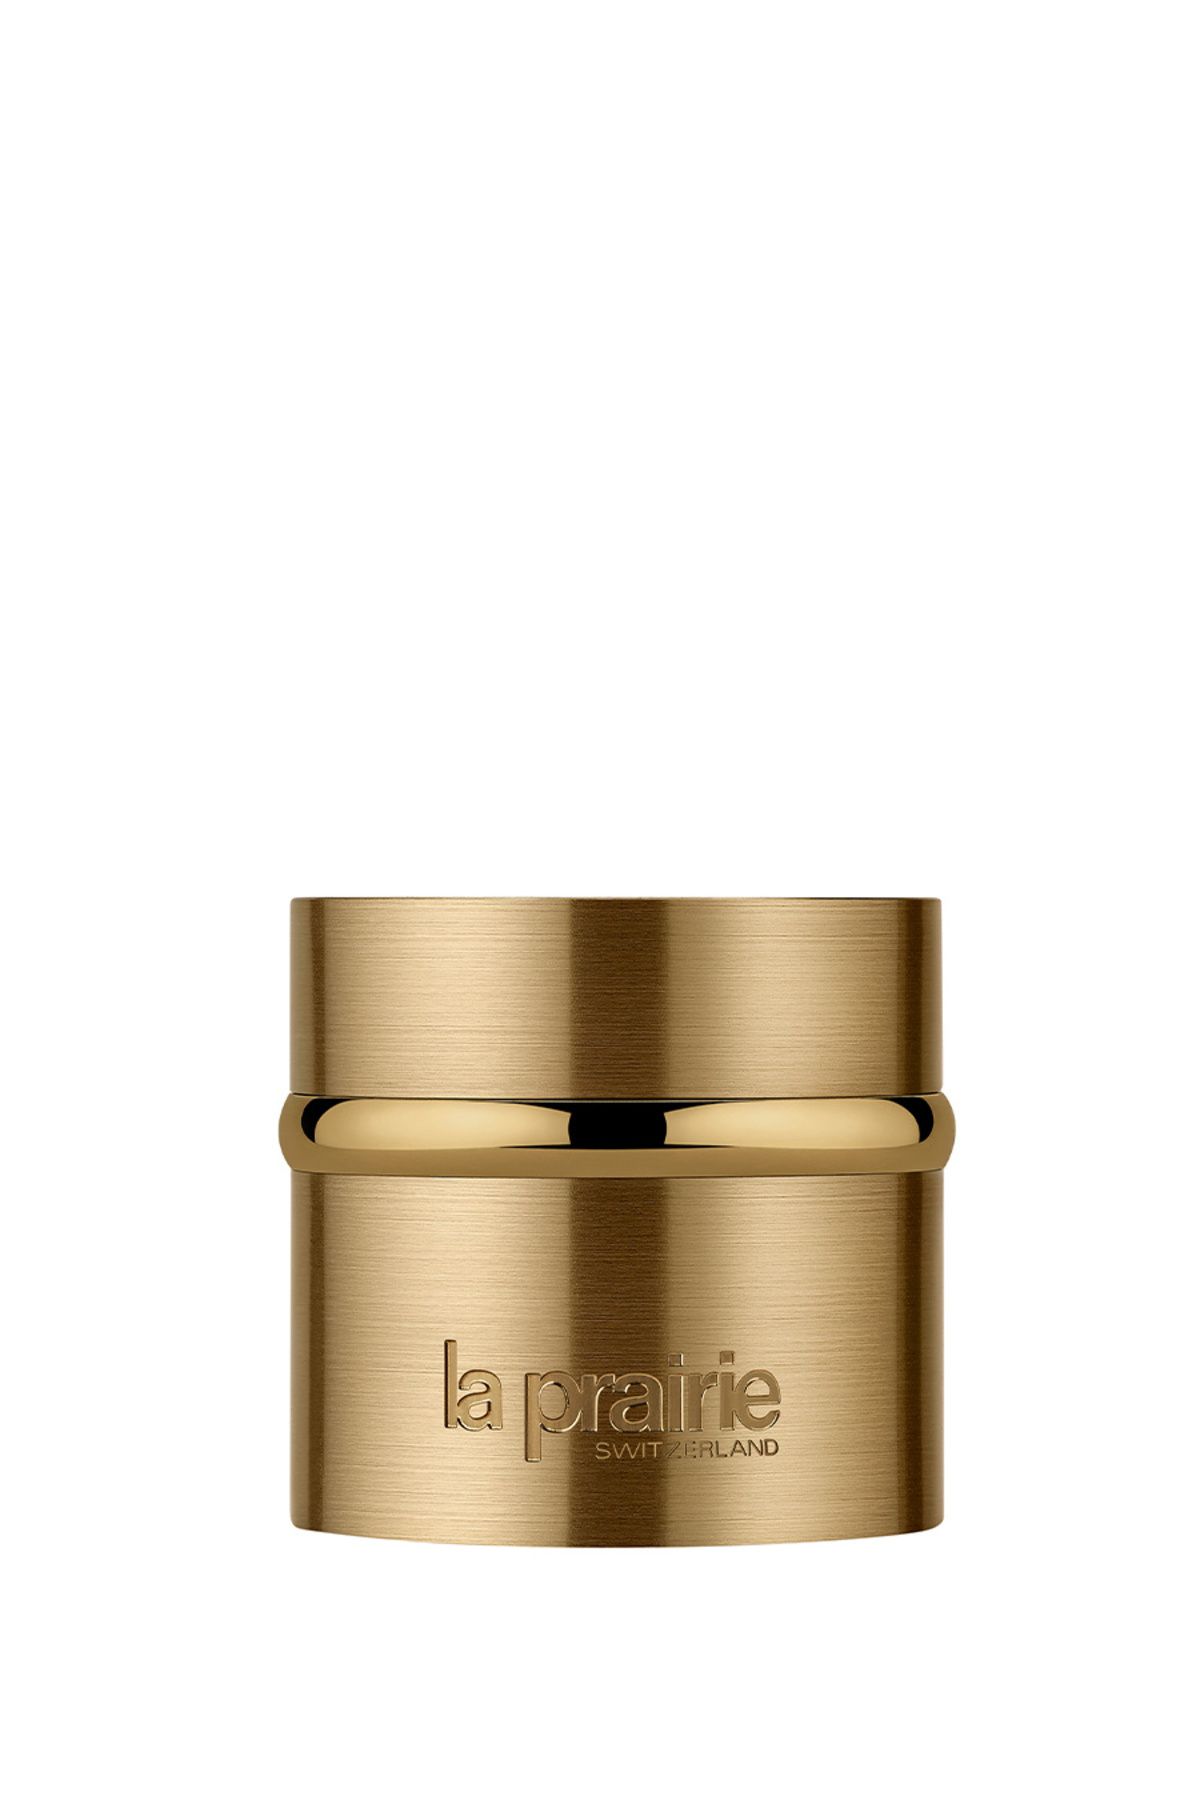 La Prairie Pure Gold Radiance 50ml Cream